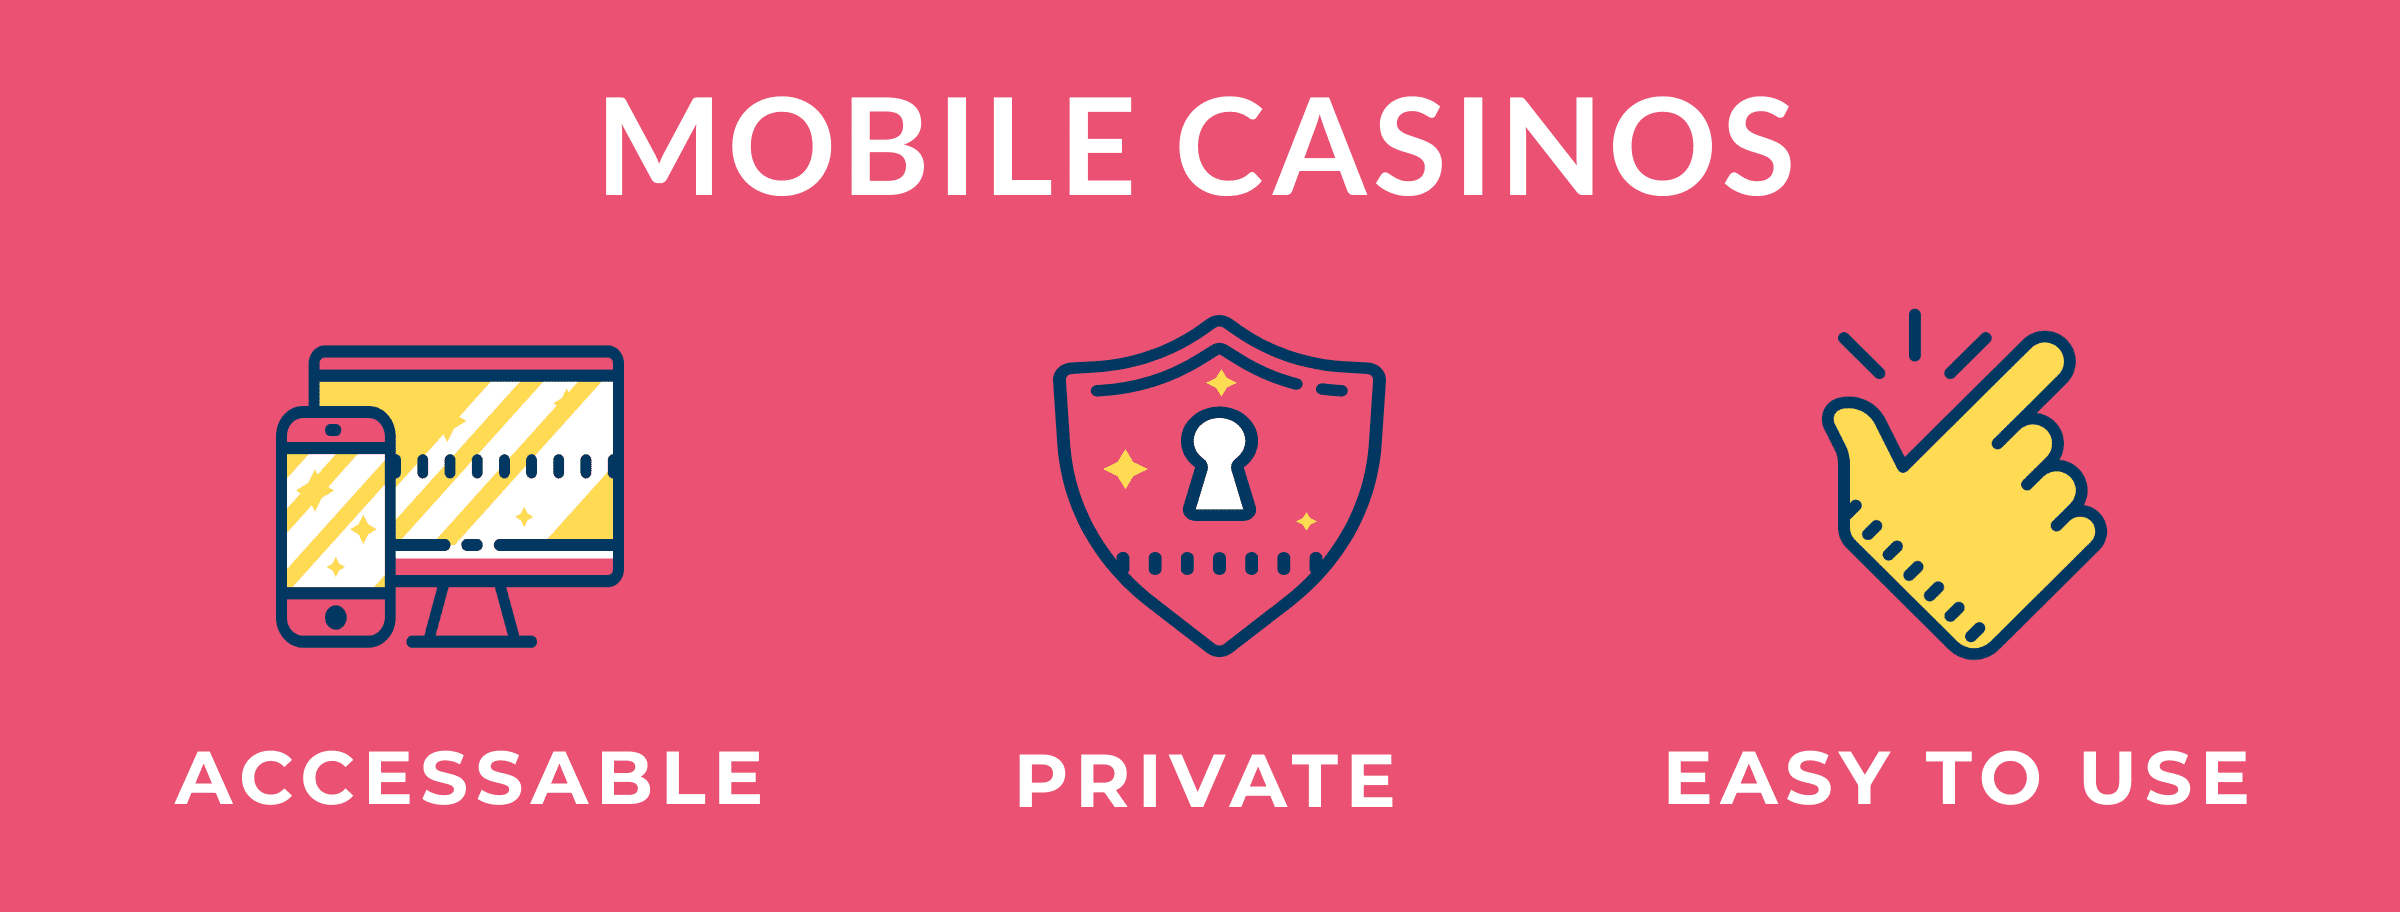 mobile casinos benefits